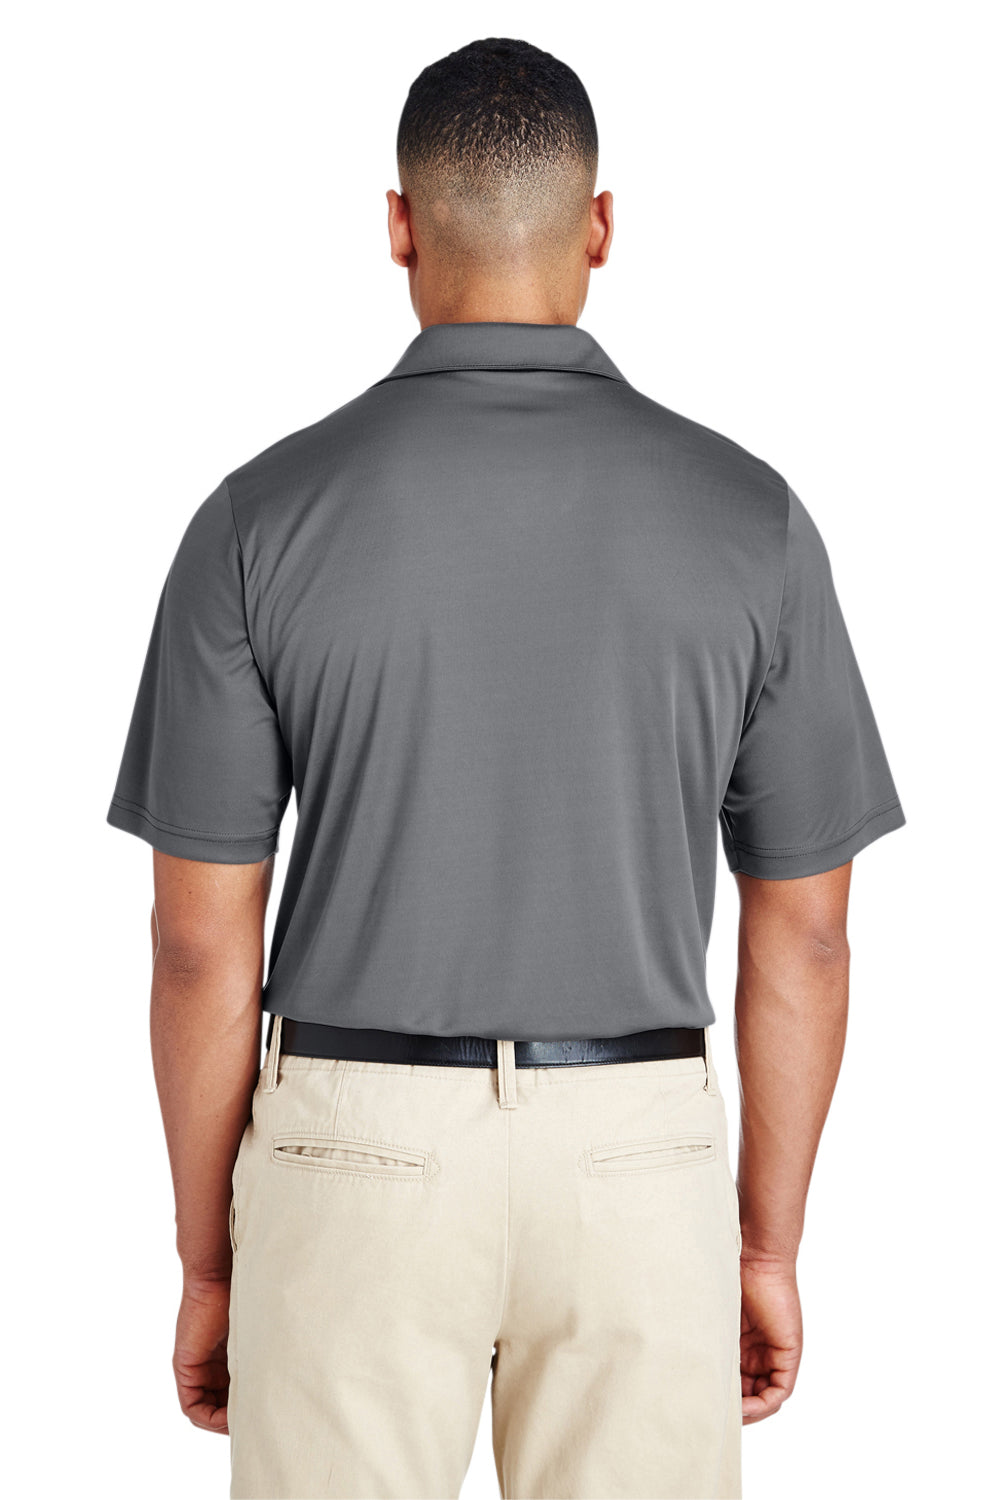 Team 365 TT51 Mens Zone Performance Moisture Wicking Short Sleeve Polo Shirt Graphite Grey Back